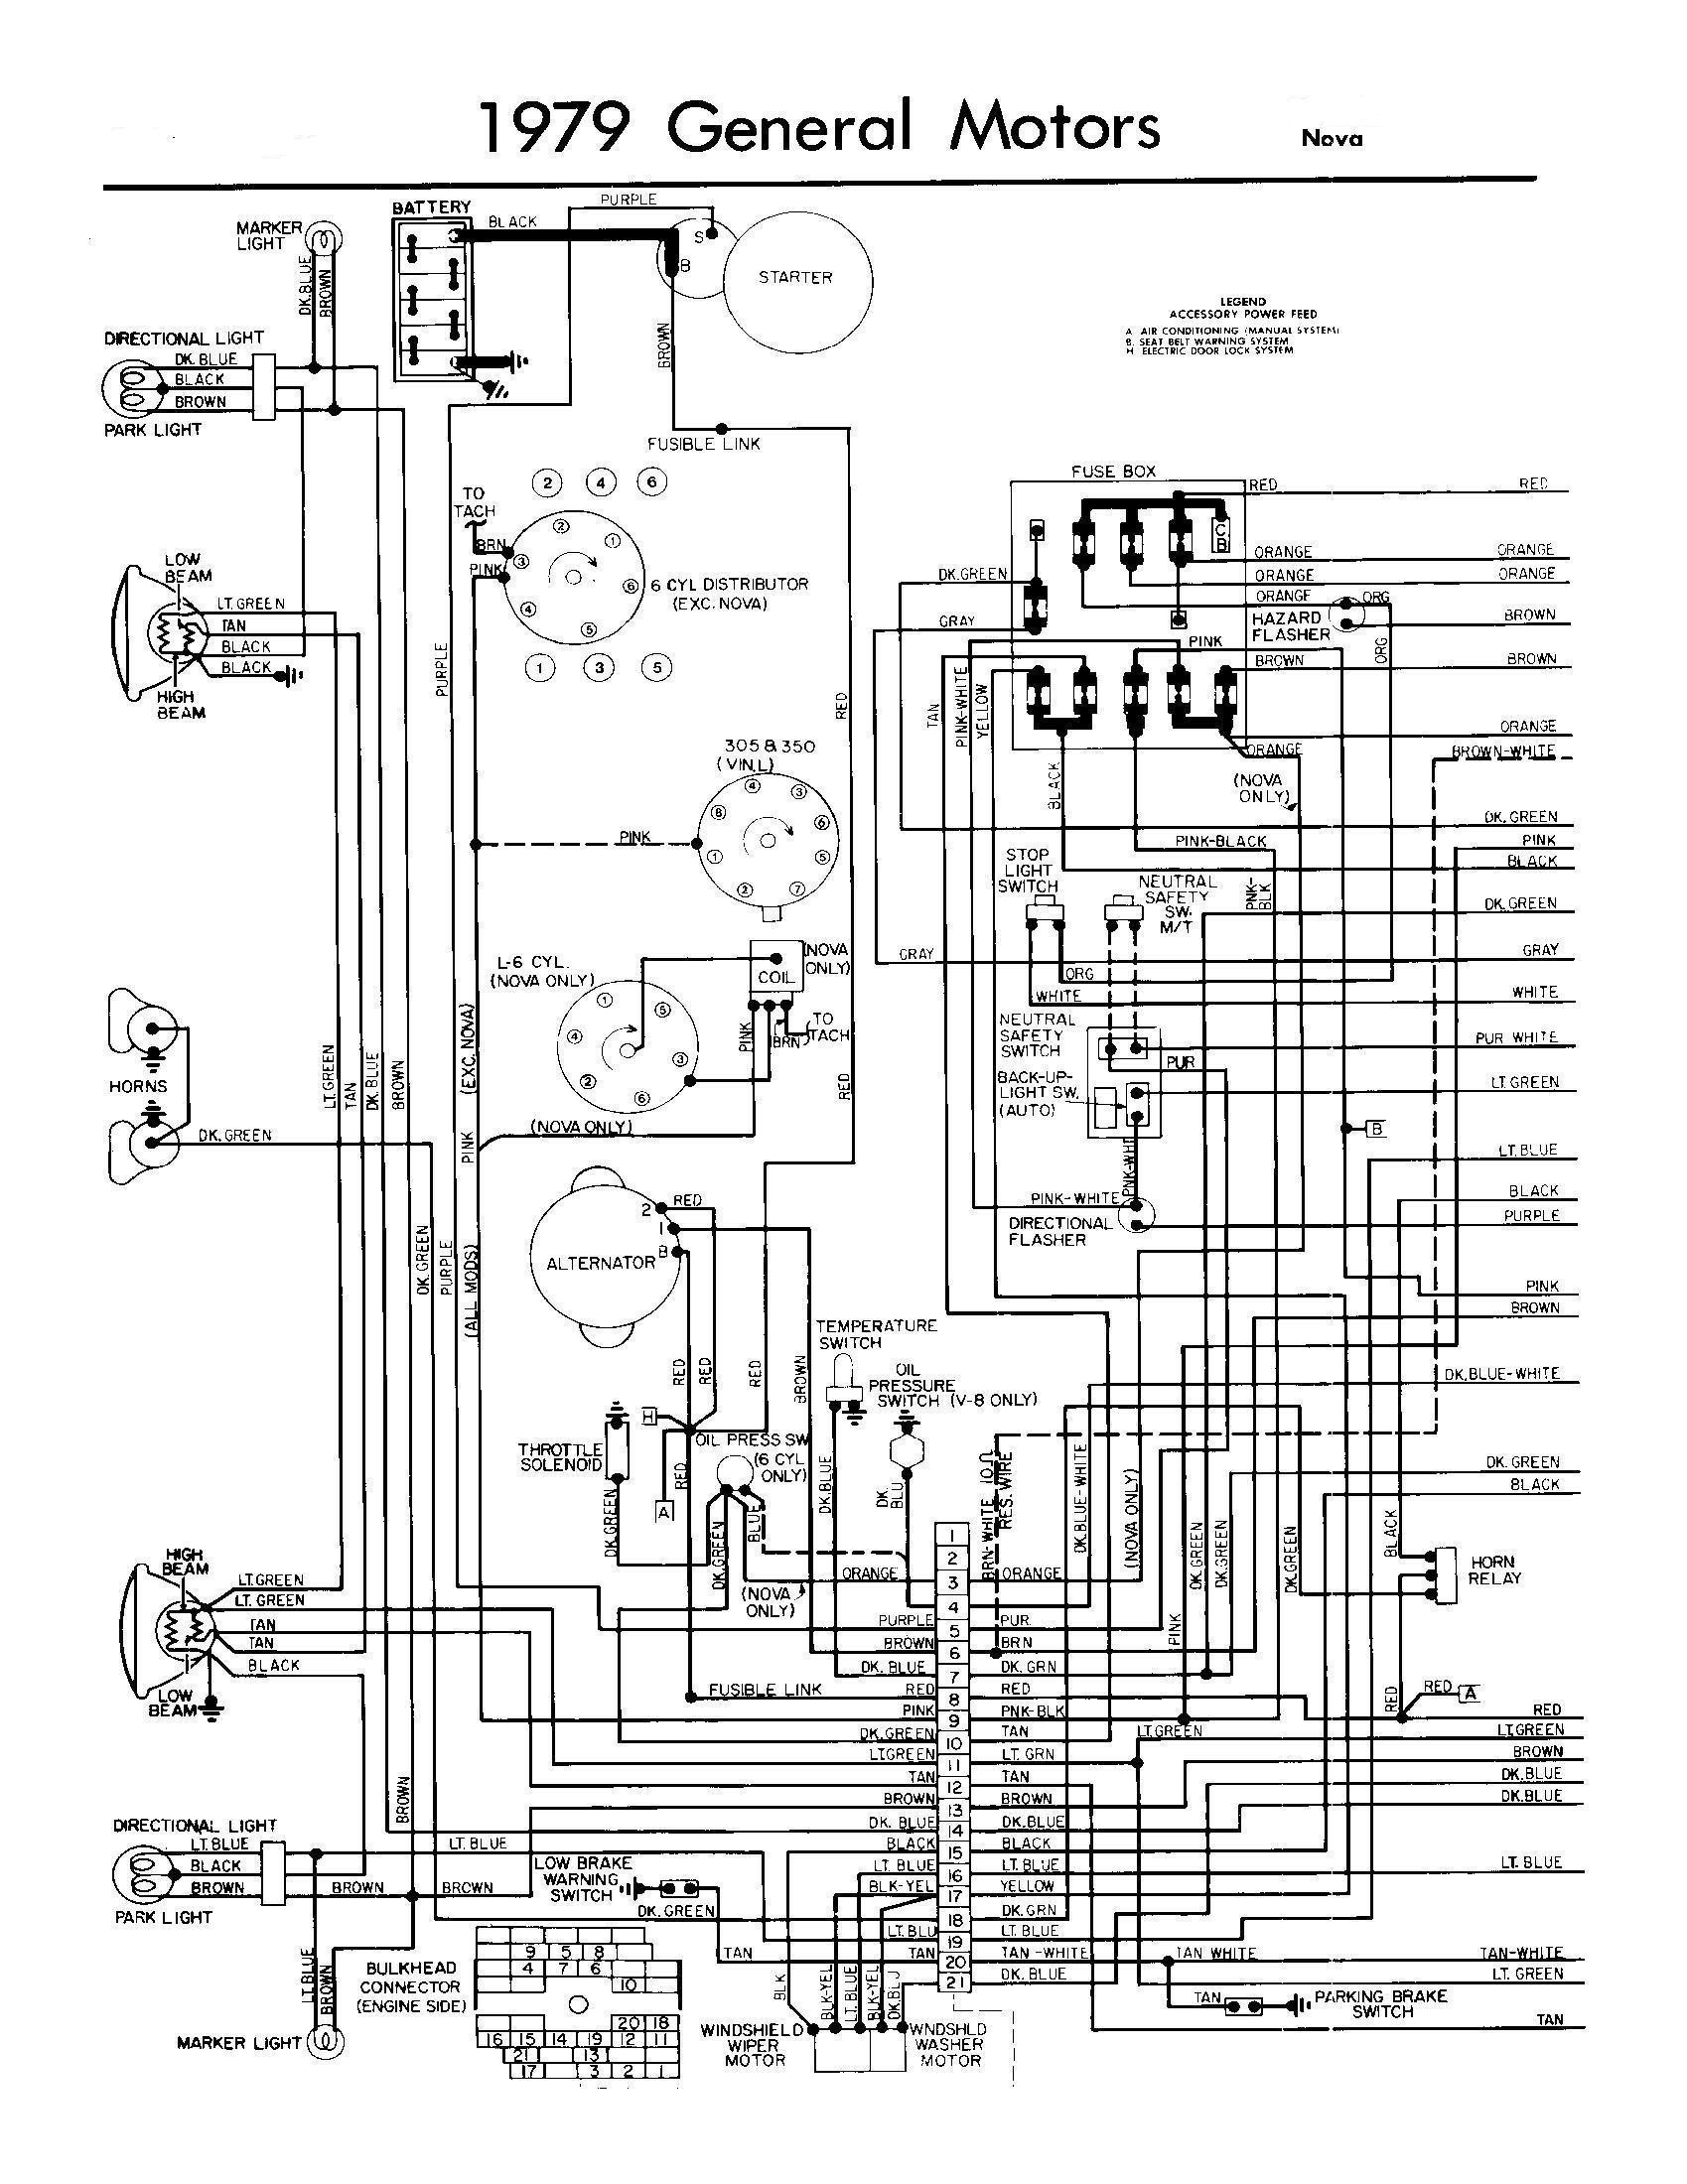 Wiring Diagram Replace Generator With Alternator 6 V26No1 Fig4 - Wiring Diagram Replace Generator With Alternator